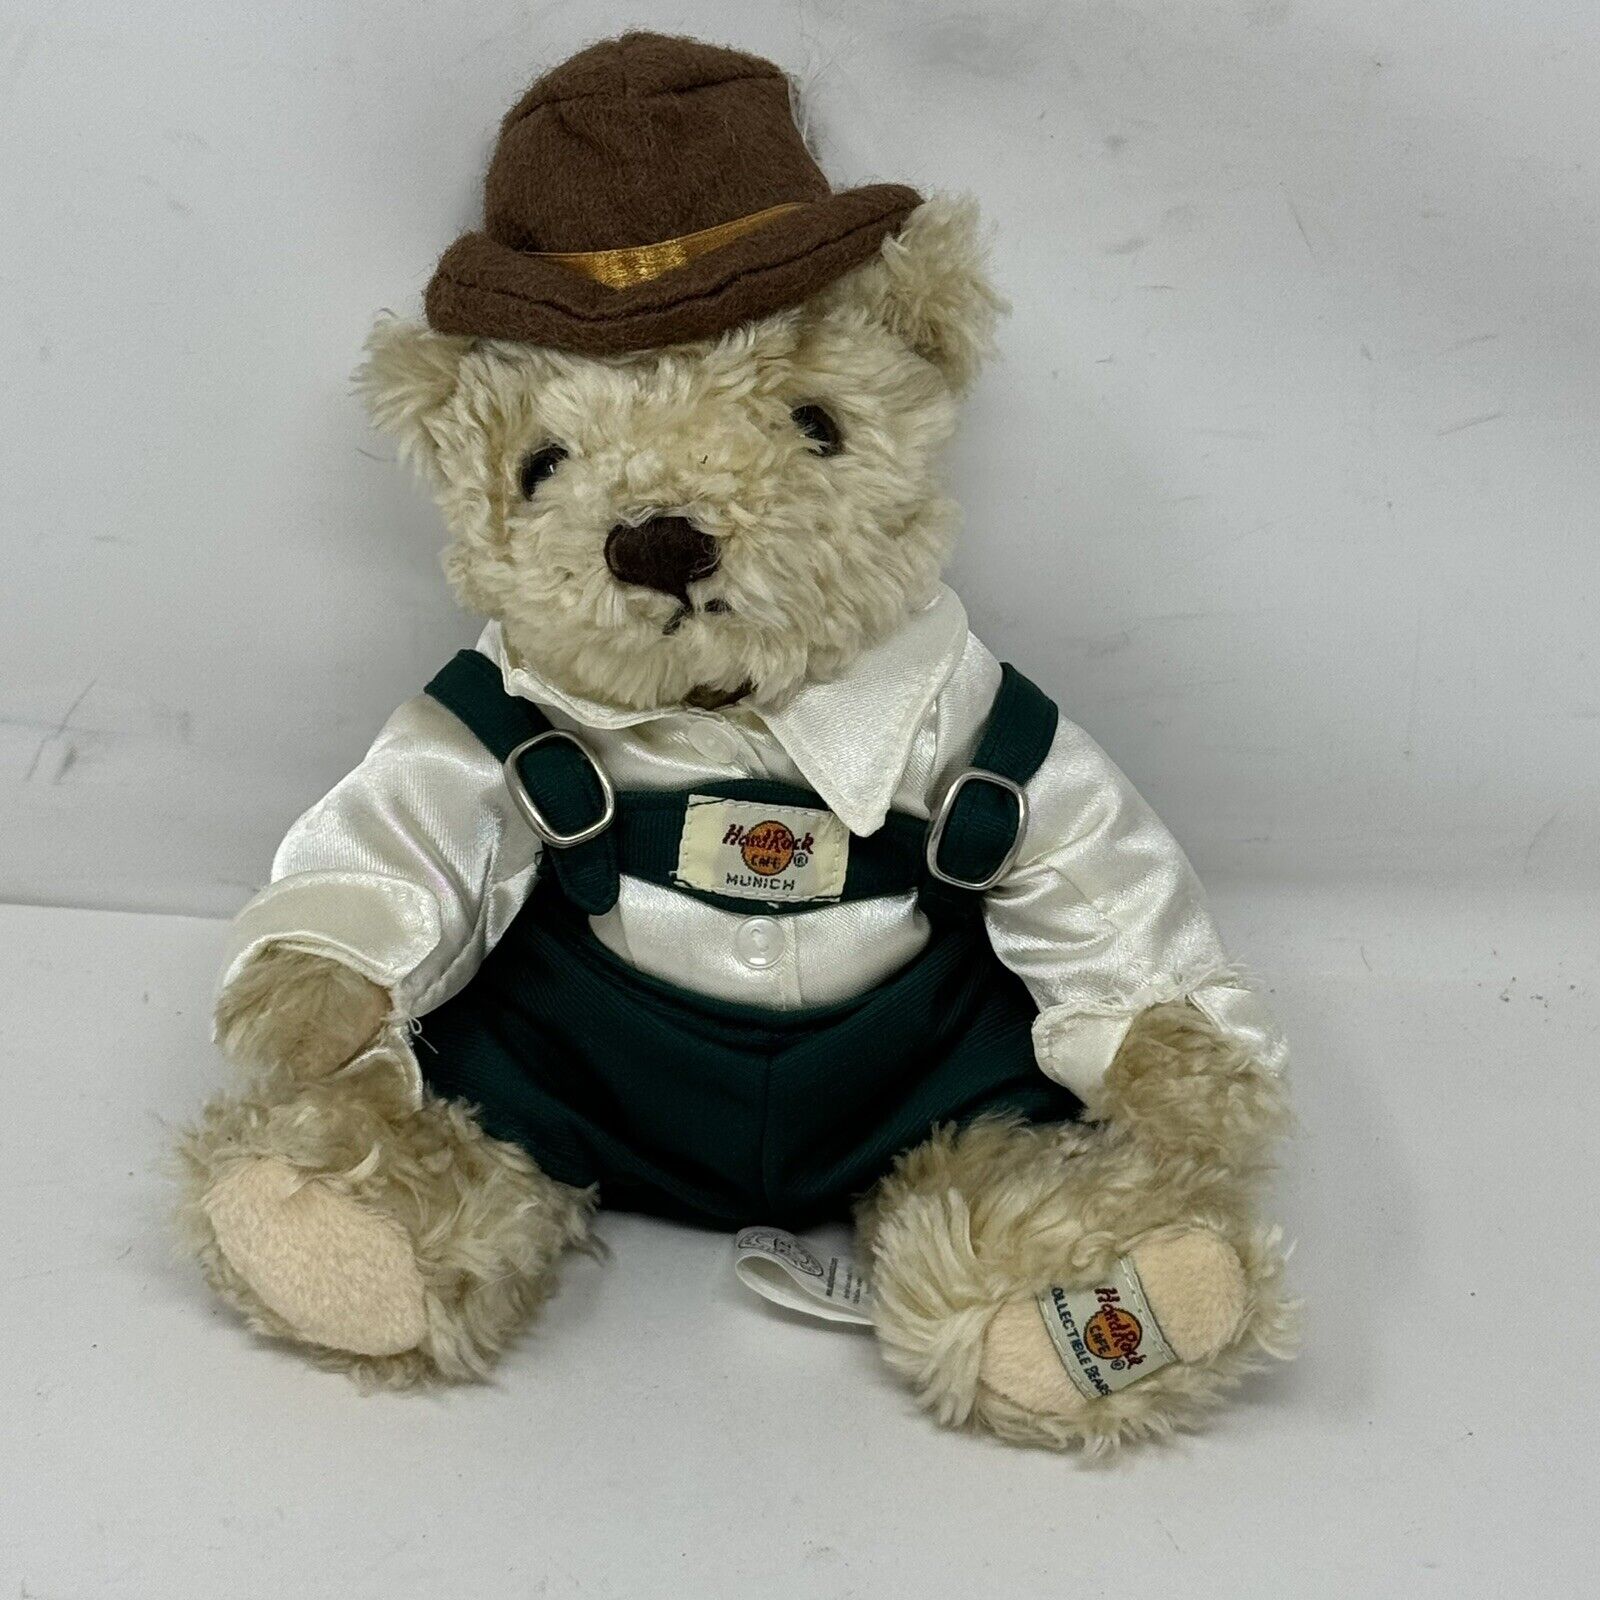 Herrington Hard Rock Cafe Munich Teddy Bear Stuffed Animal 2003 Lederhosen Rare